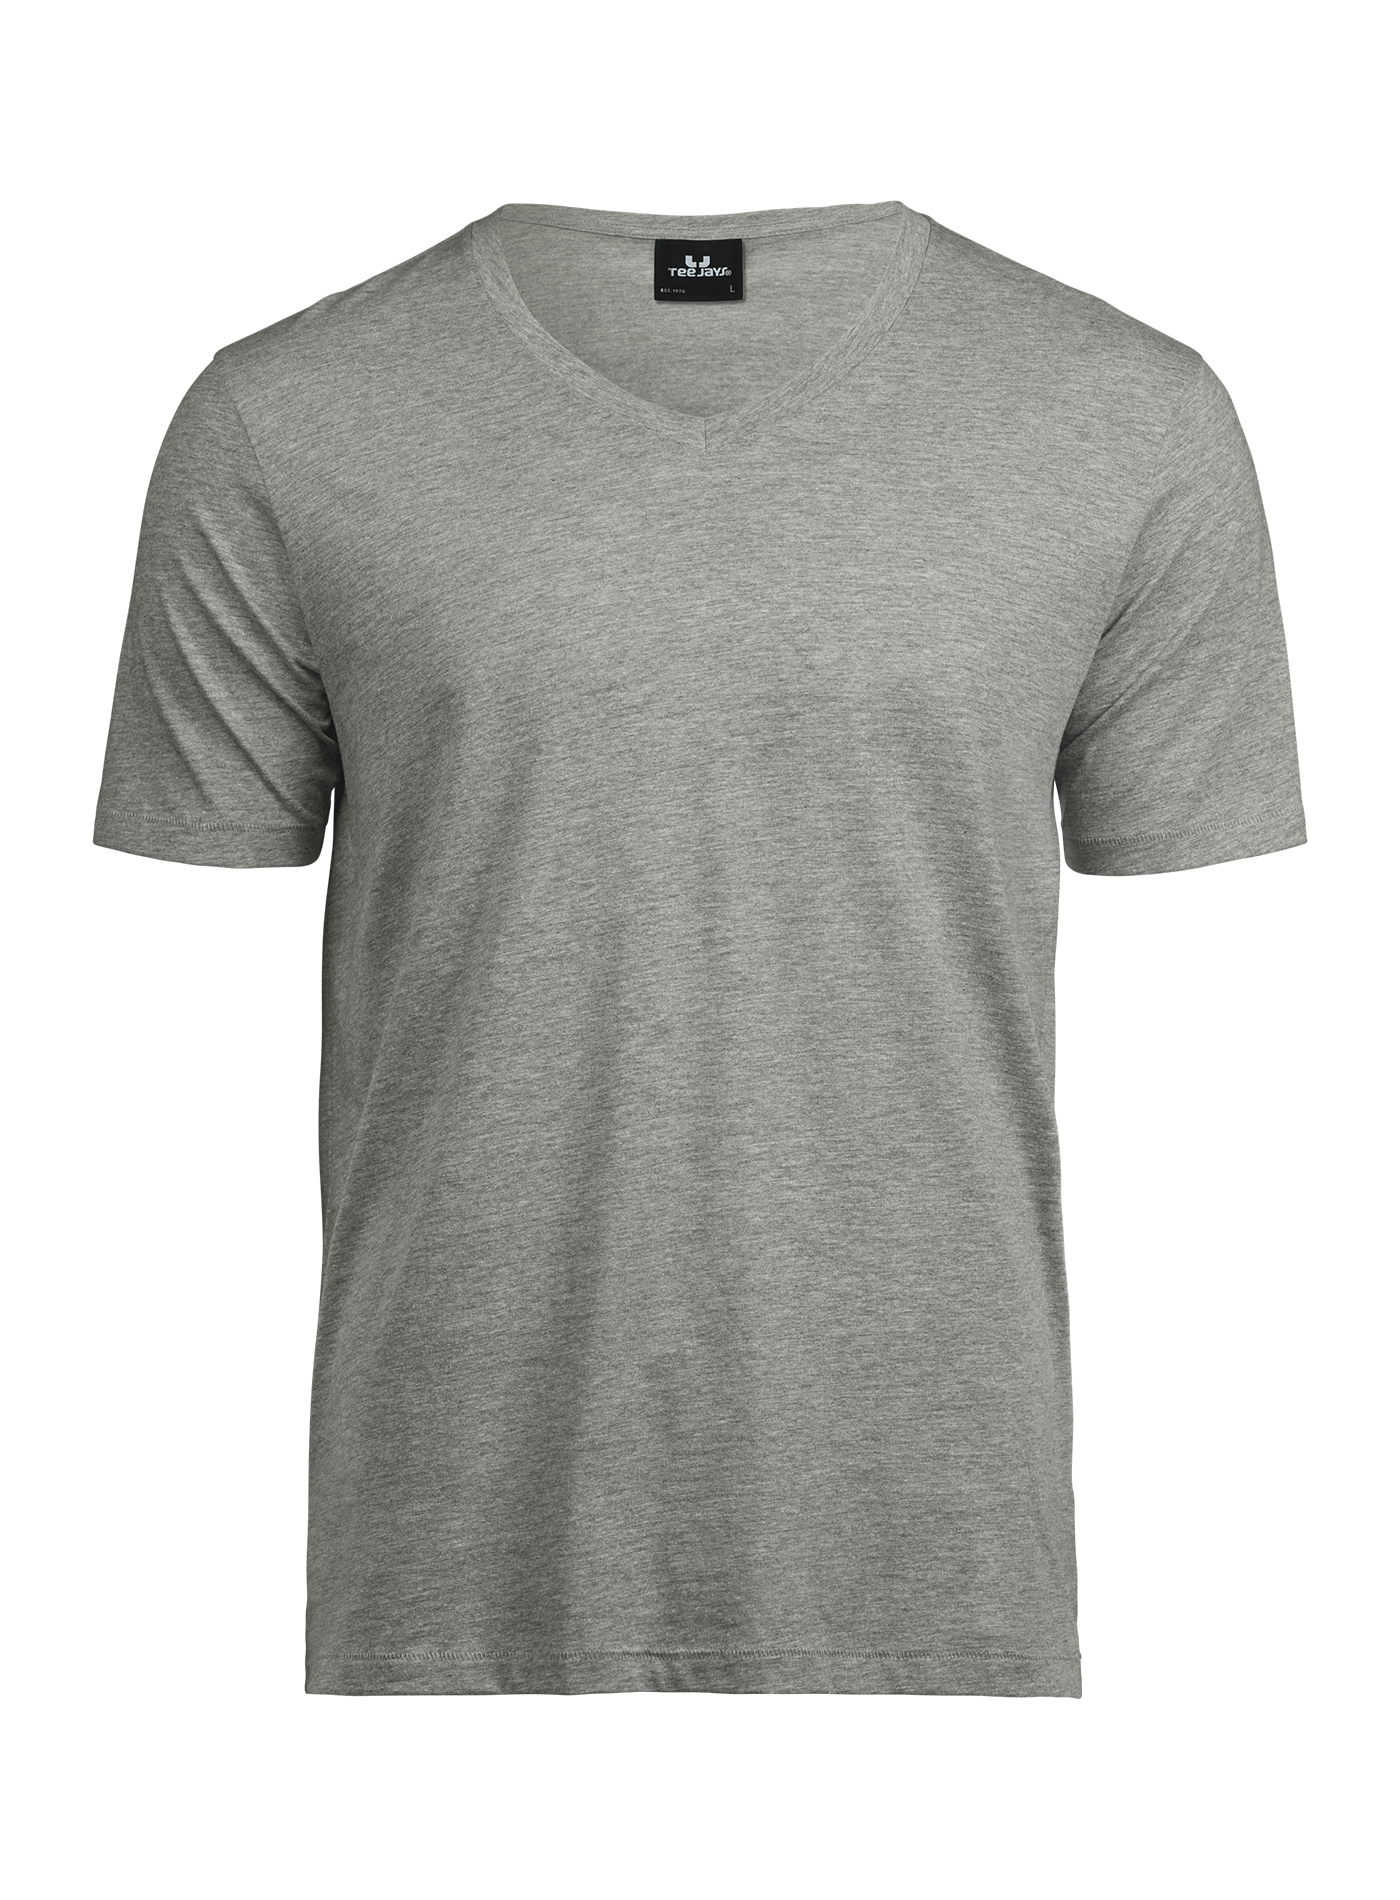 Pánské tričko s výstřihem do V Tee Jays - šedý melír M